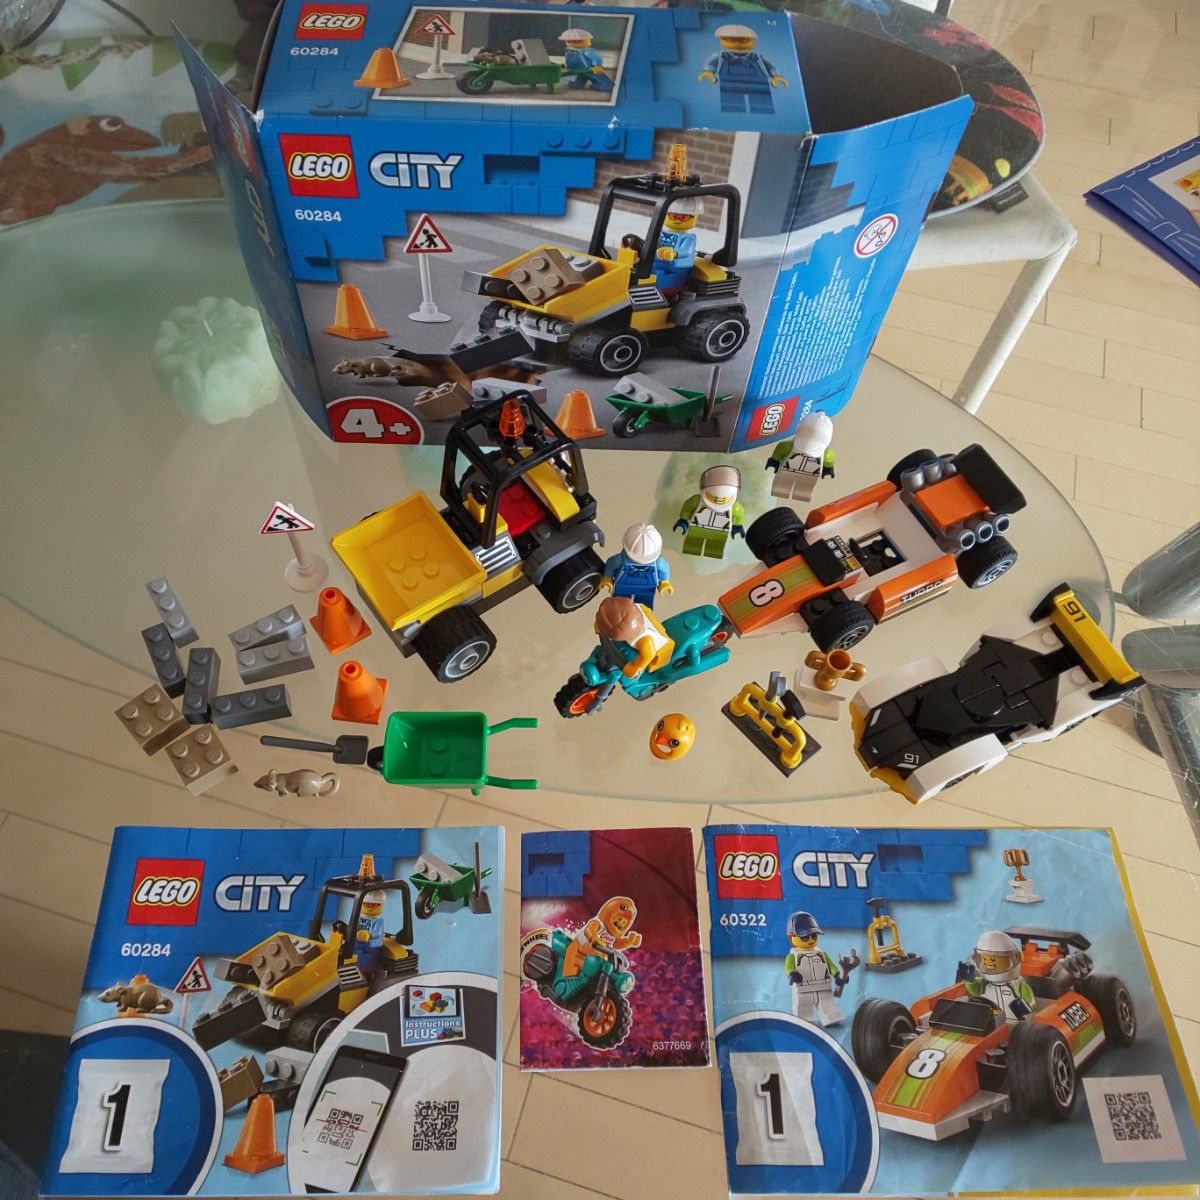 LEGO レゴ 【レゴ LEGOまとめ売り・新品価格8066円相当】工事用トラック、自走バイク他